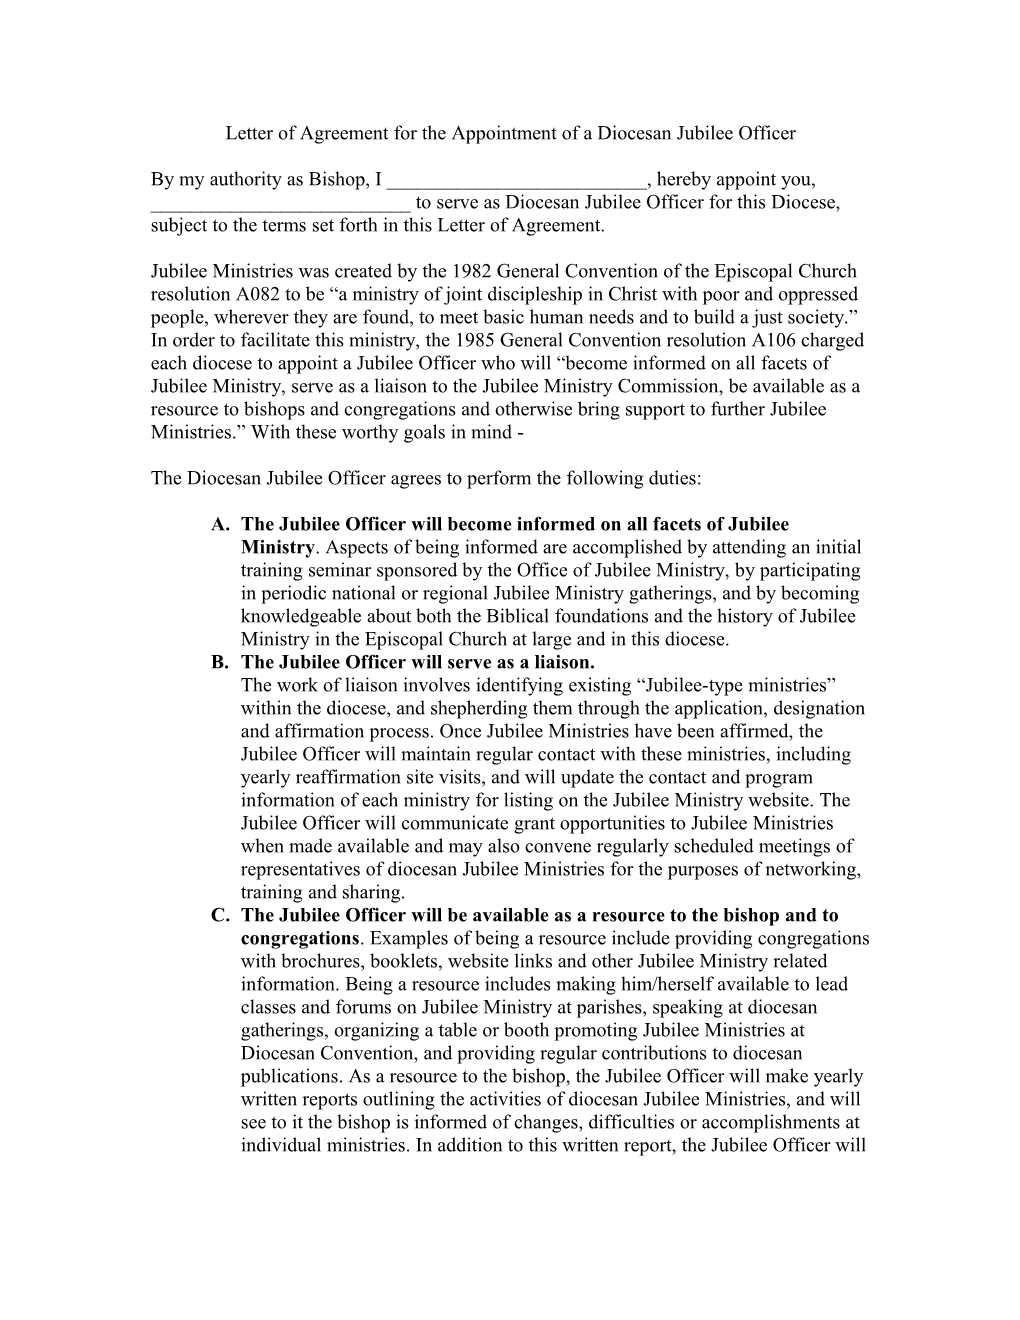 Sample Letter of Agreement Diocesan Jubilee Officer